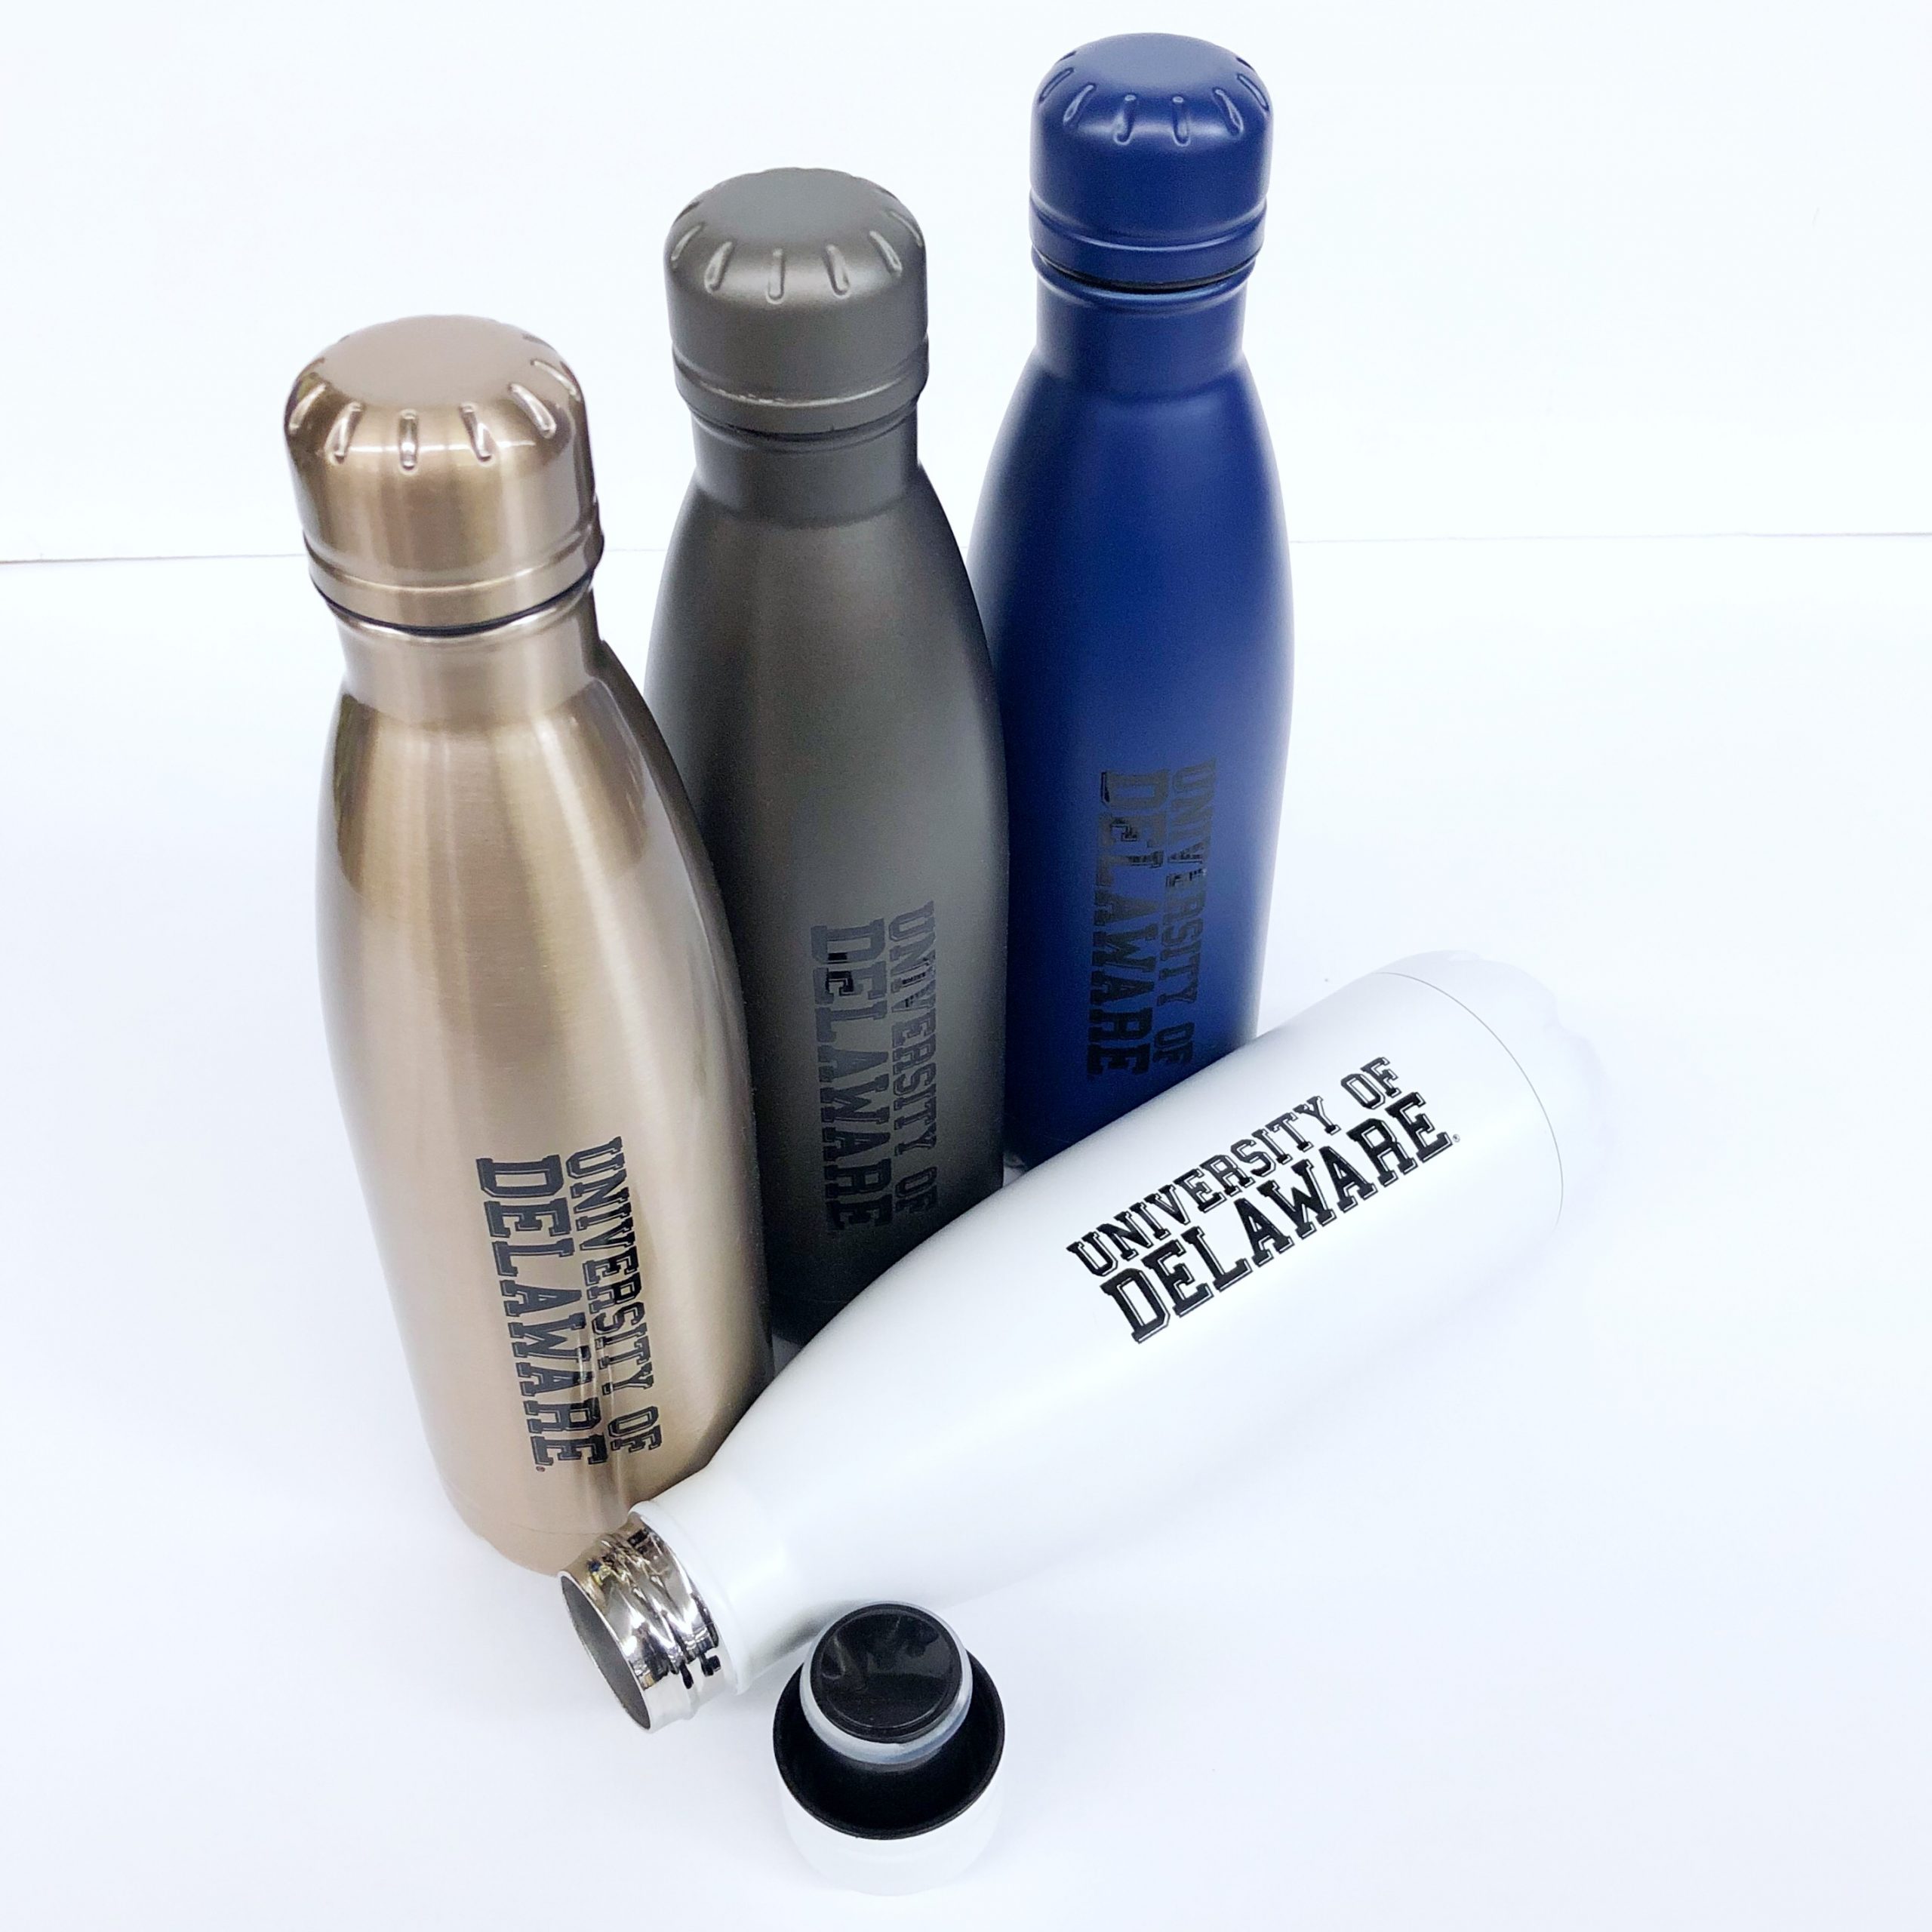 Swell - Aluminum Water Bottle